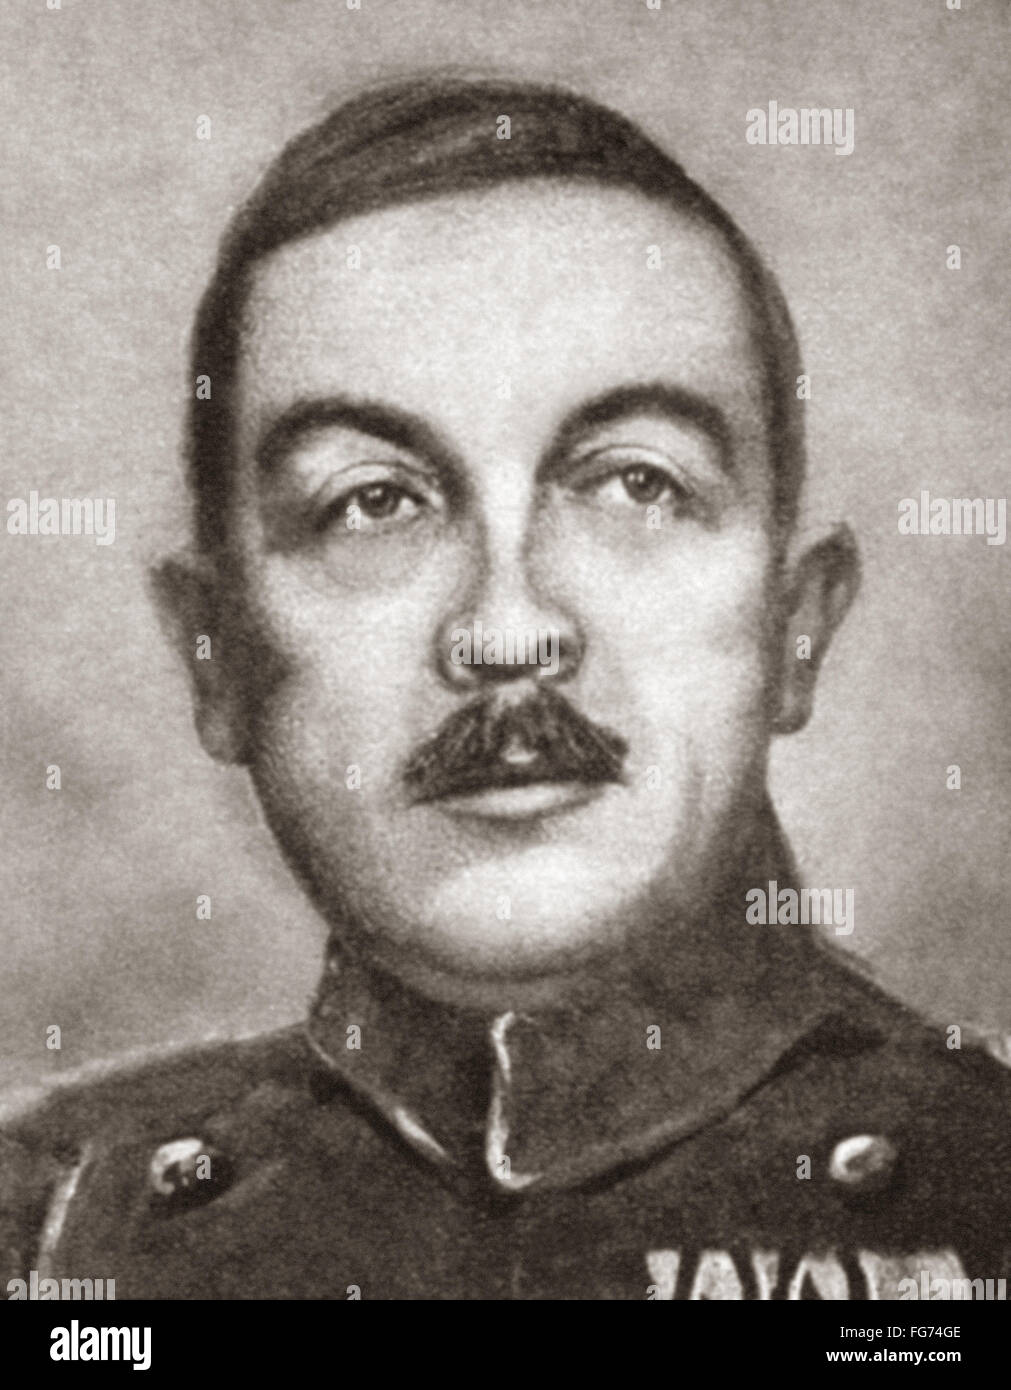 RICHARD VON KUHLMANN /n(1873-1948). German diplomat. Photograph, early 20th century. Stock Photo